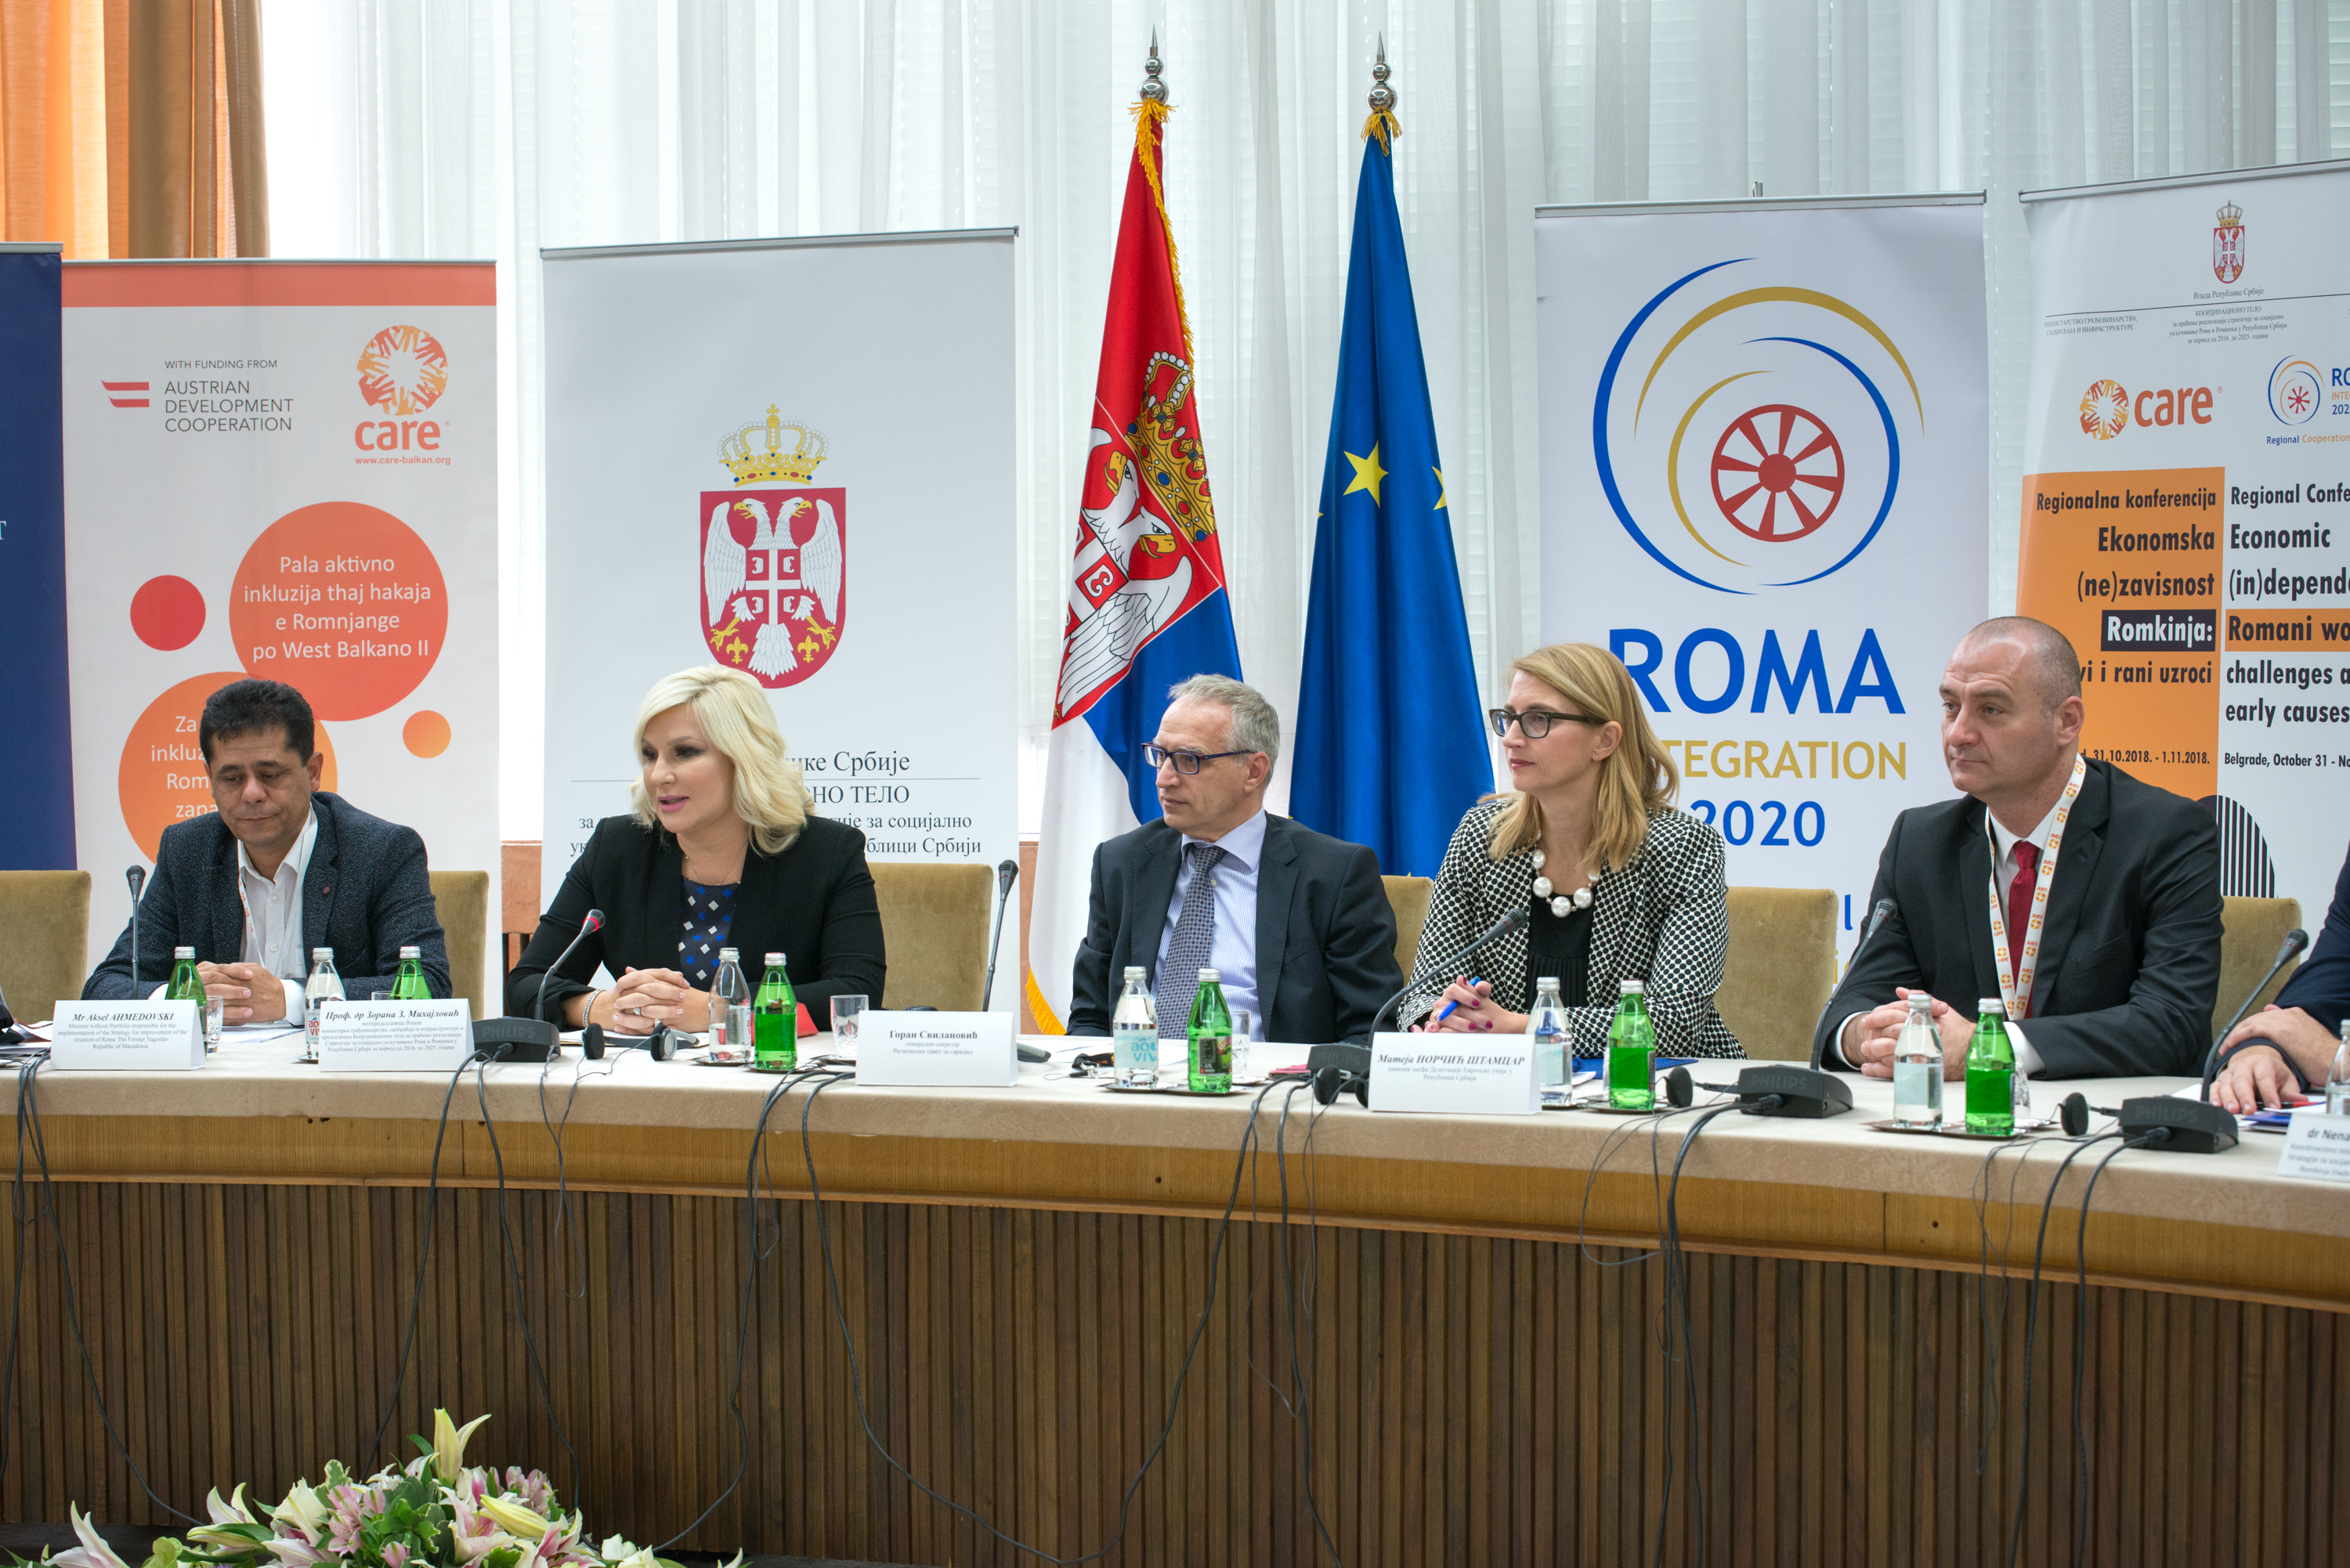 Opening of the regional conference on economic situation of Romani women in the European Union enlargement region, in Belgrade on 31 October 2018 (Photo: RCC/Nemanja Brankovic)